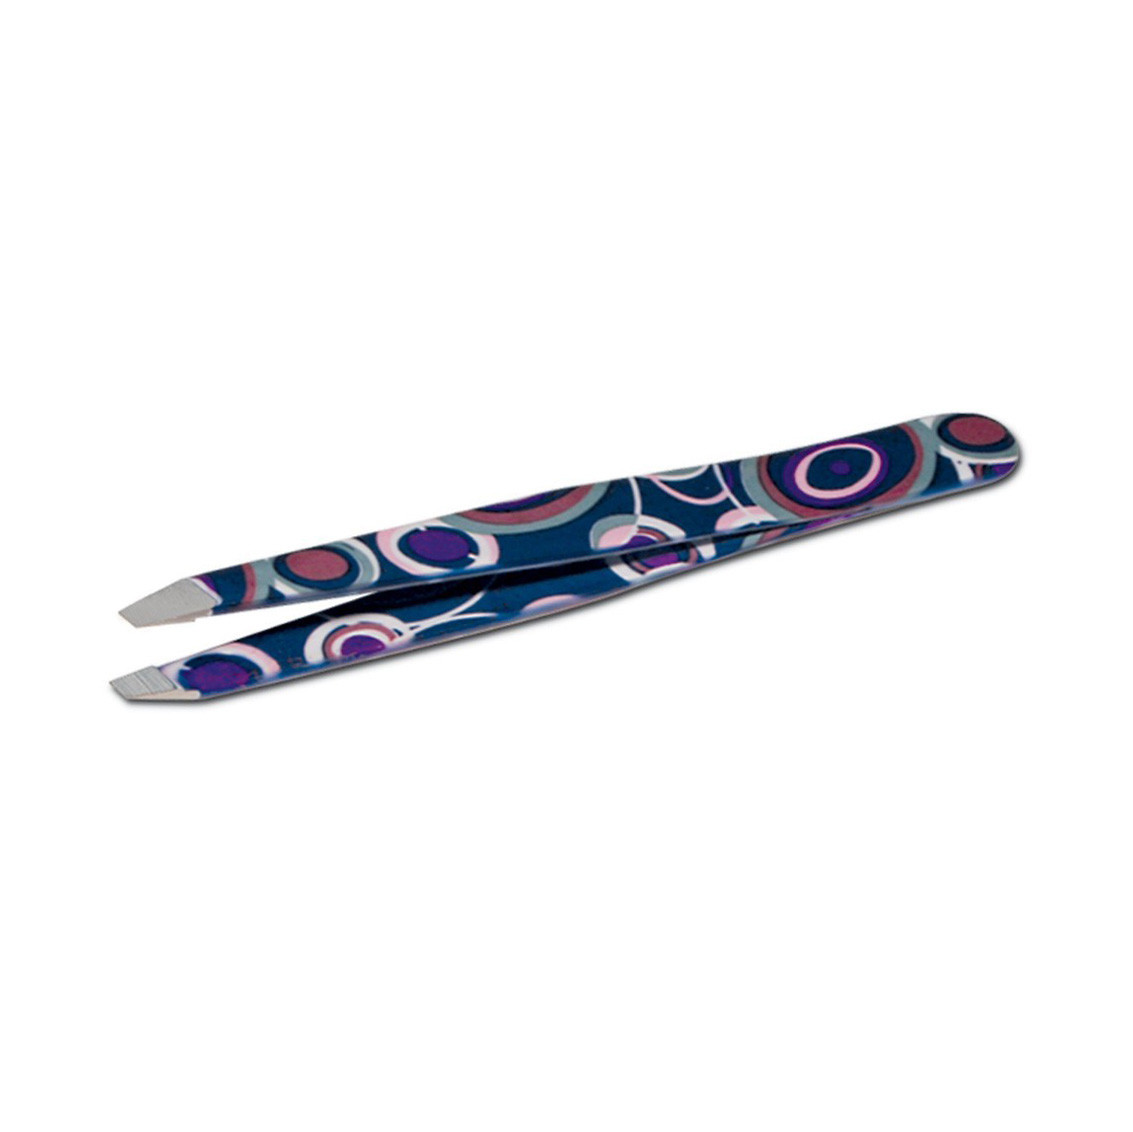 Seventies Edelstahl-Profi-Augenbrauenpinzette mit abgeschrägter Spitze lila